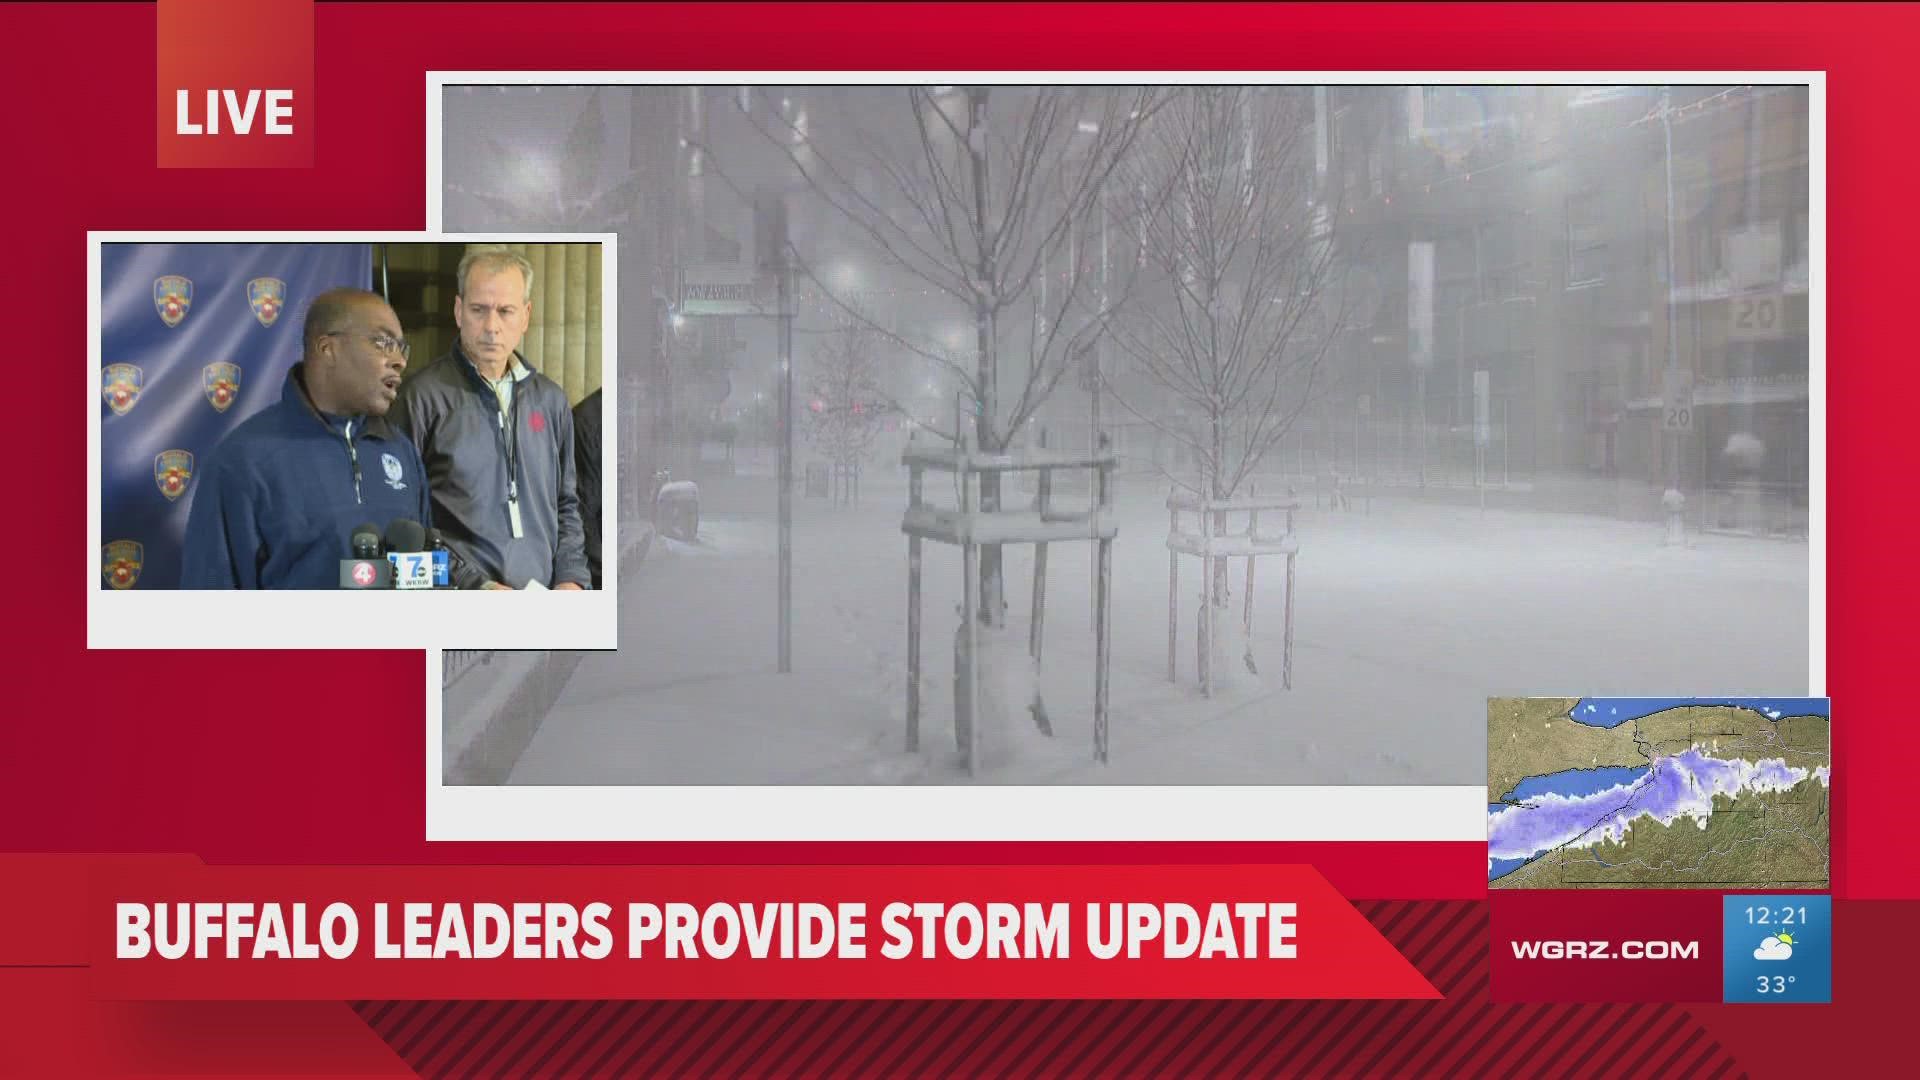 Buffalo Mayor says South Buffalo has been hit hard by lake effect snow storm